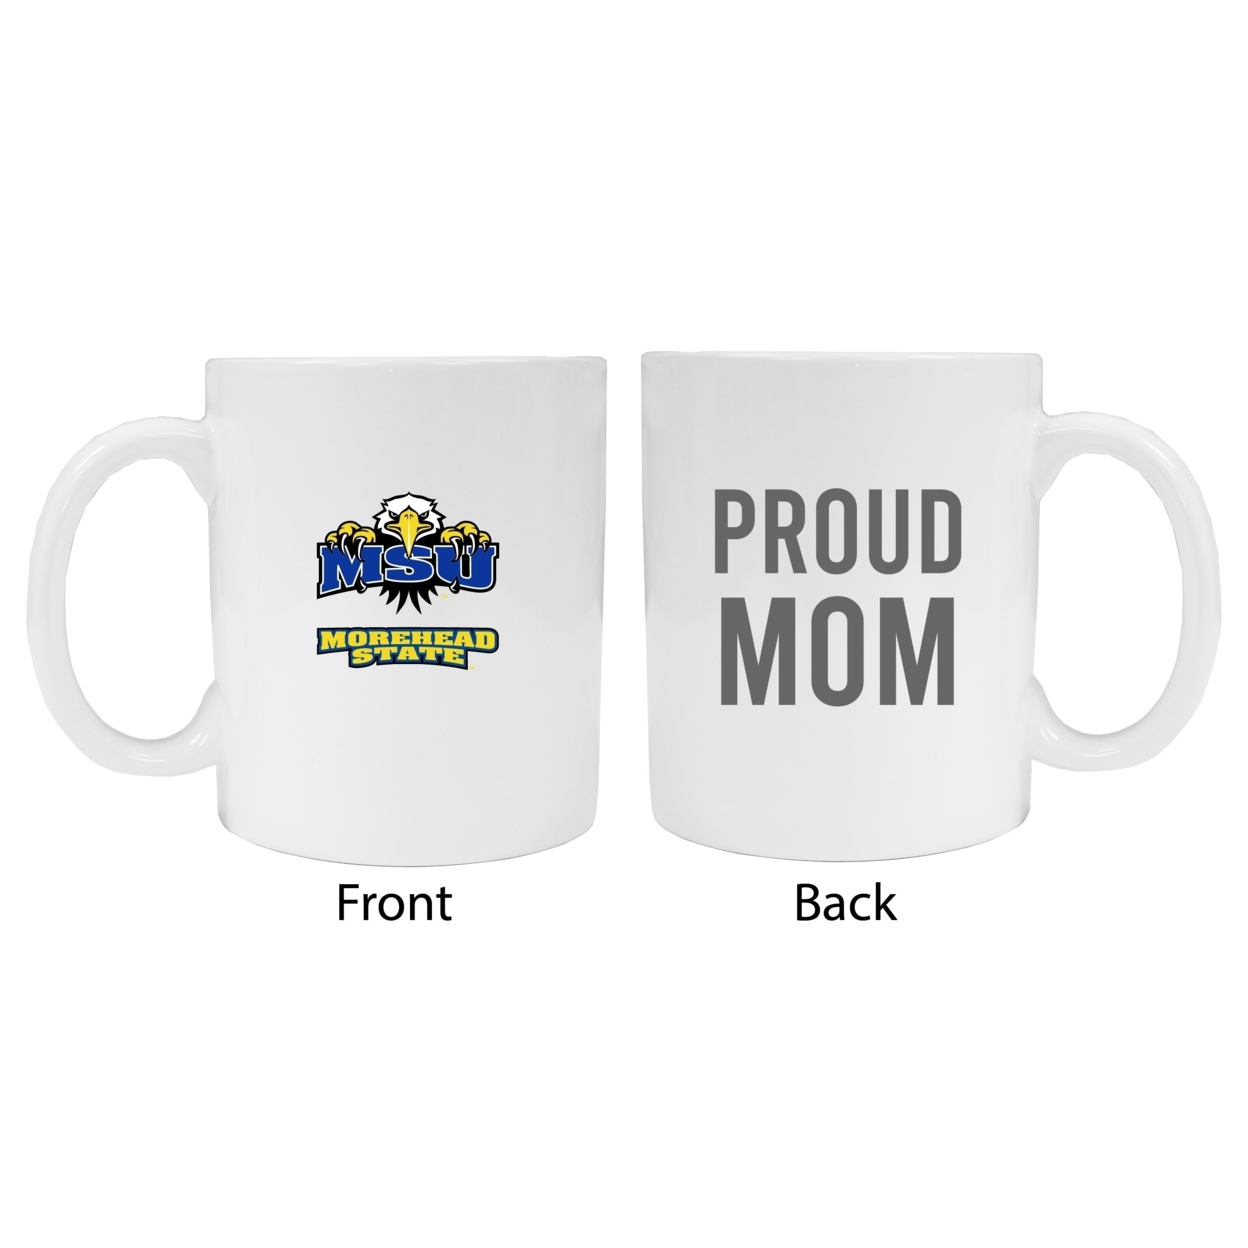 Morehead State University Proud Mom Ceramic Coffee Mug - White (2 Pack)